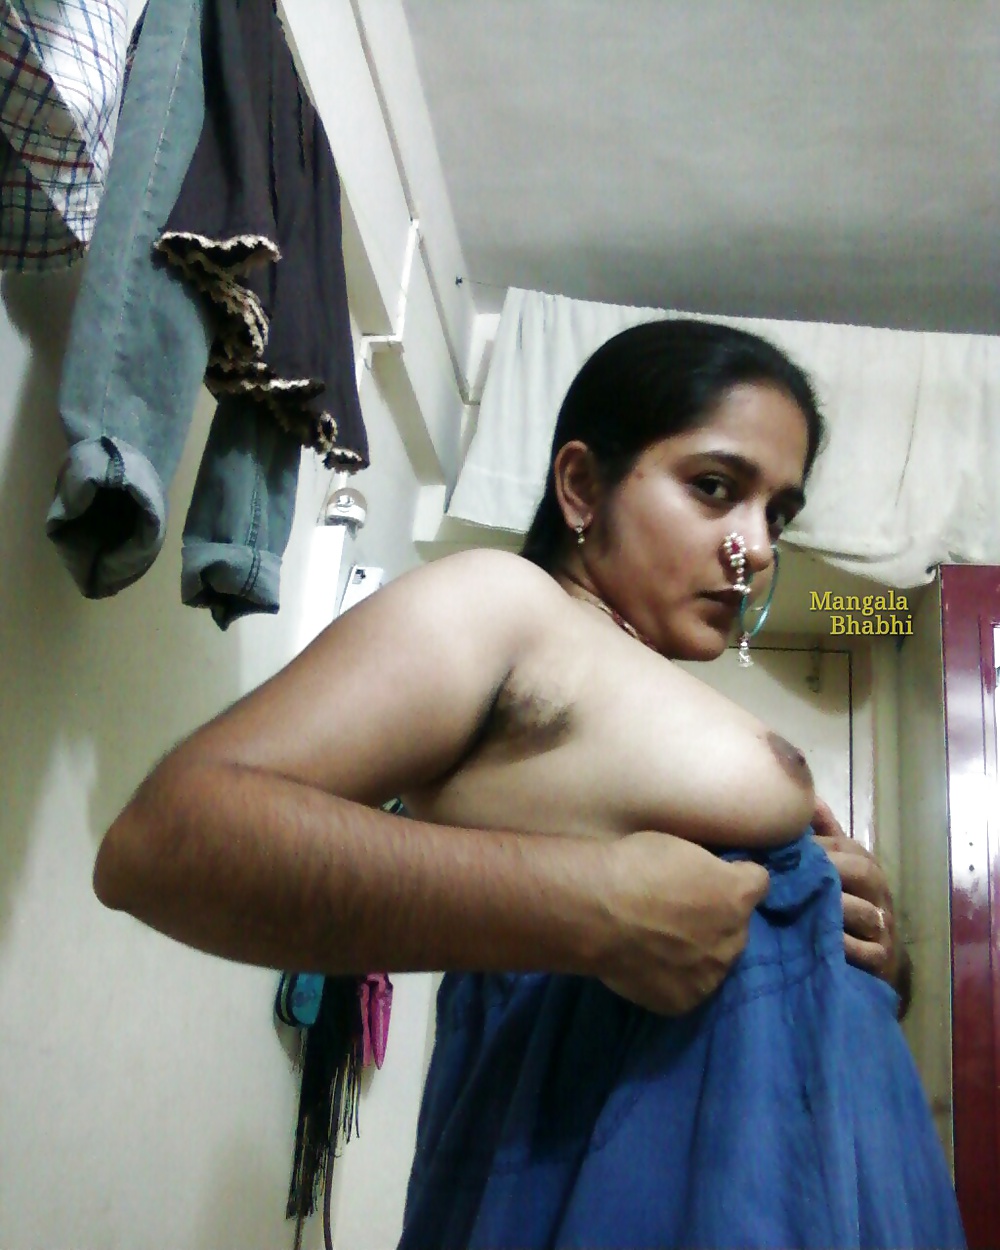 Moglie indiana mangla - set porno indiano desi 9.6
 #32287844